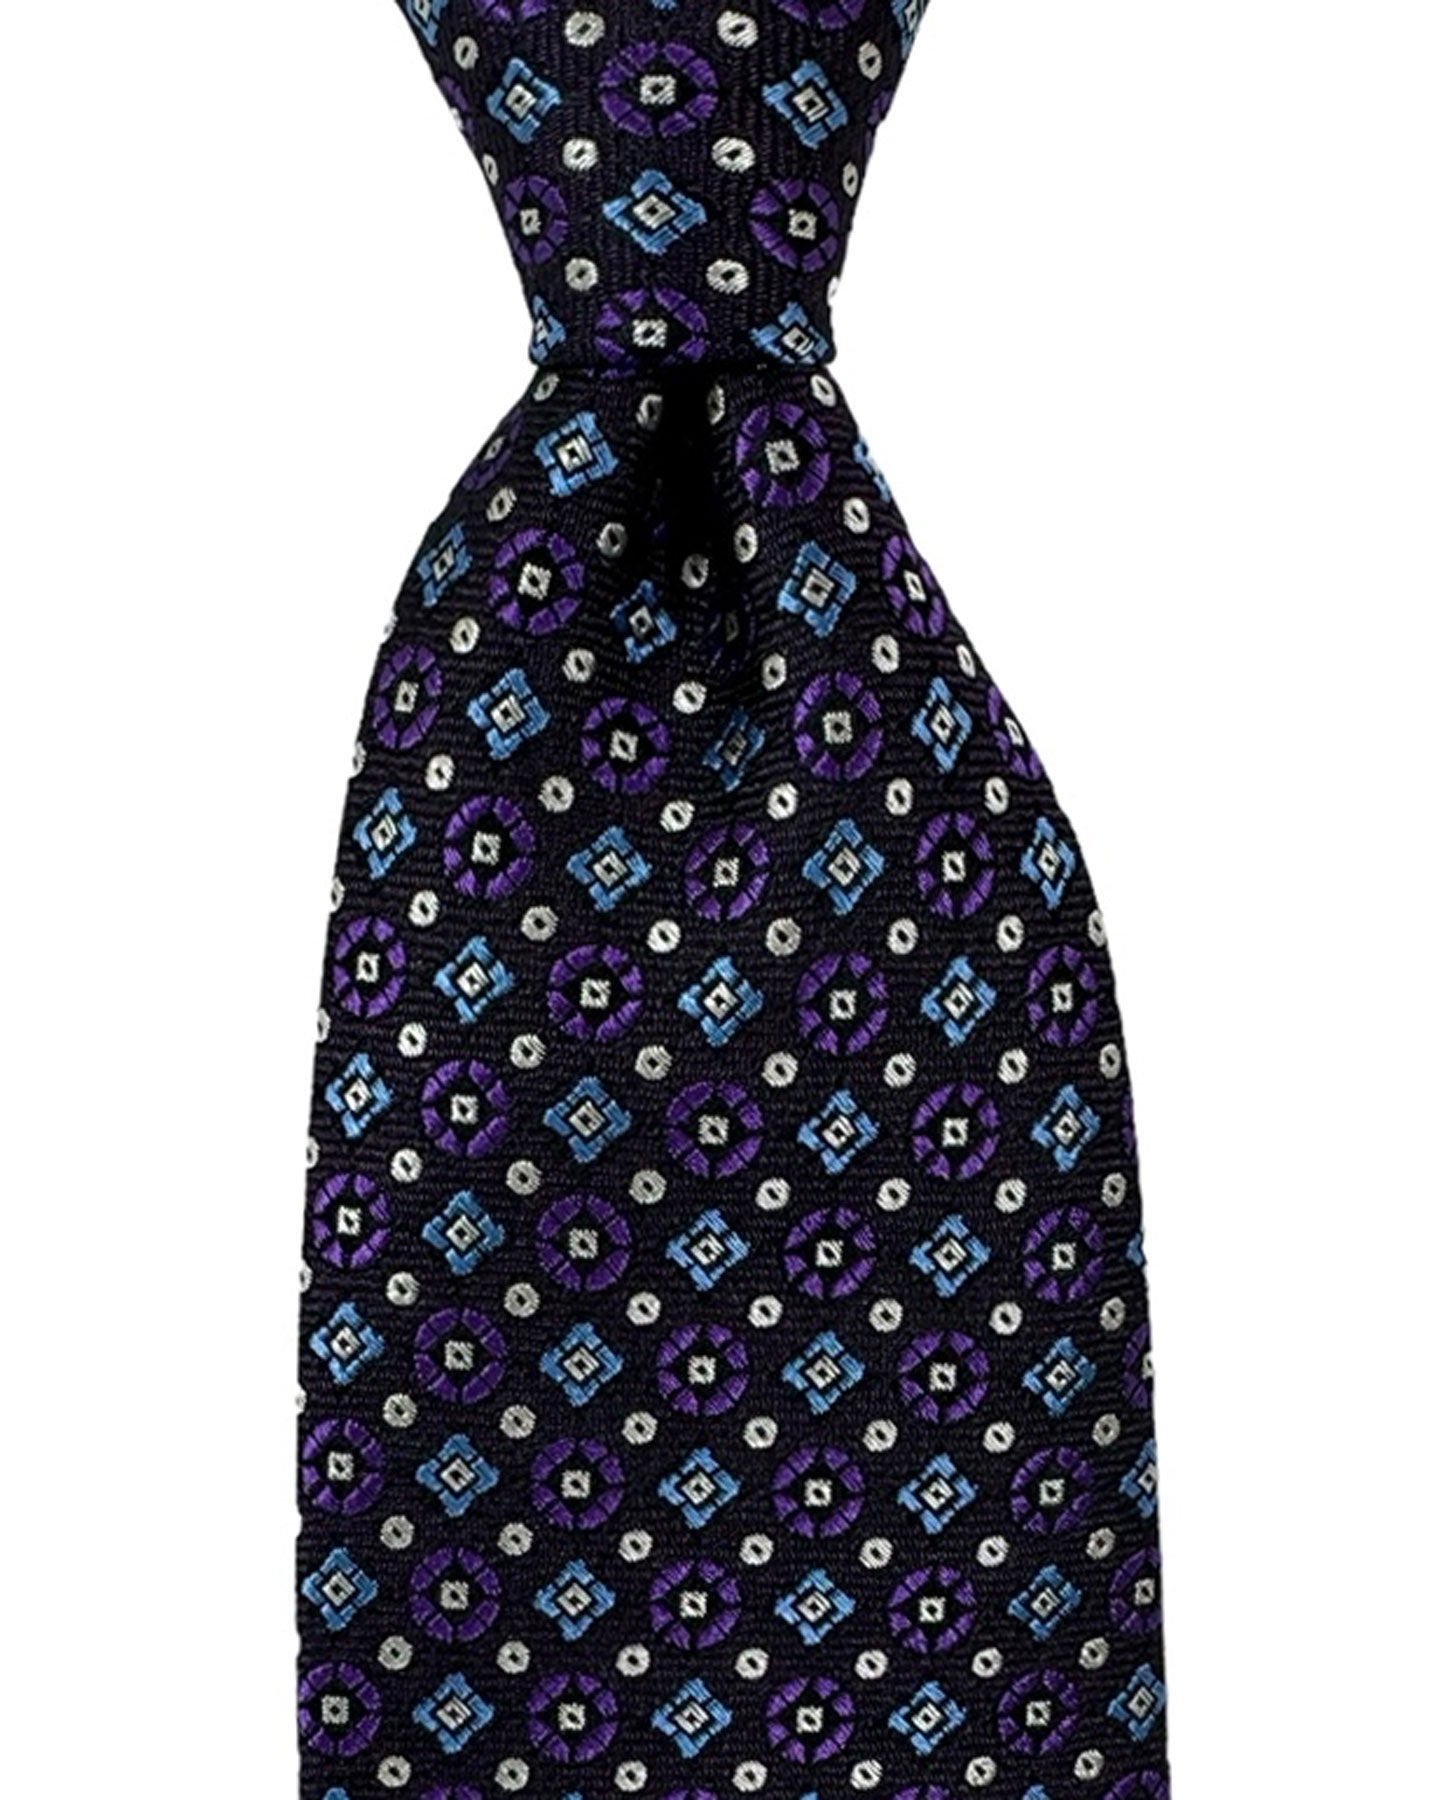 Canali Tie Purple Blue Silver Mini Geometric - Jacquard Silk